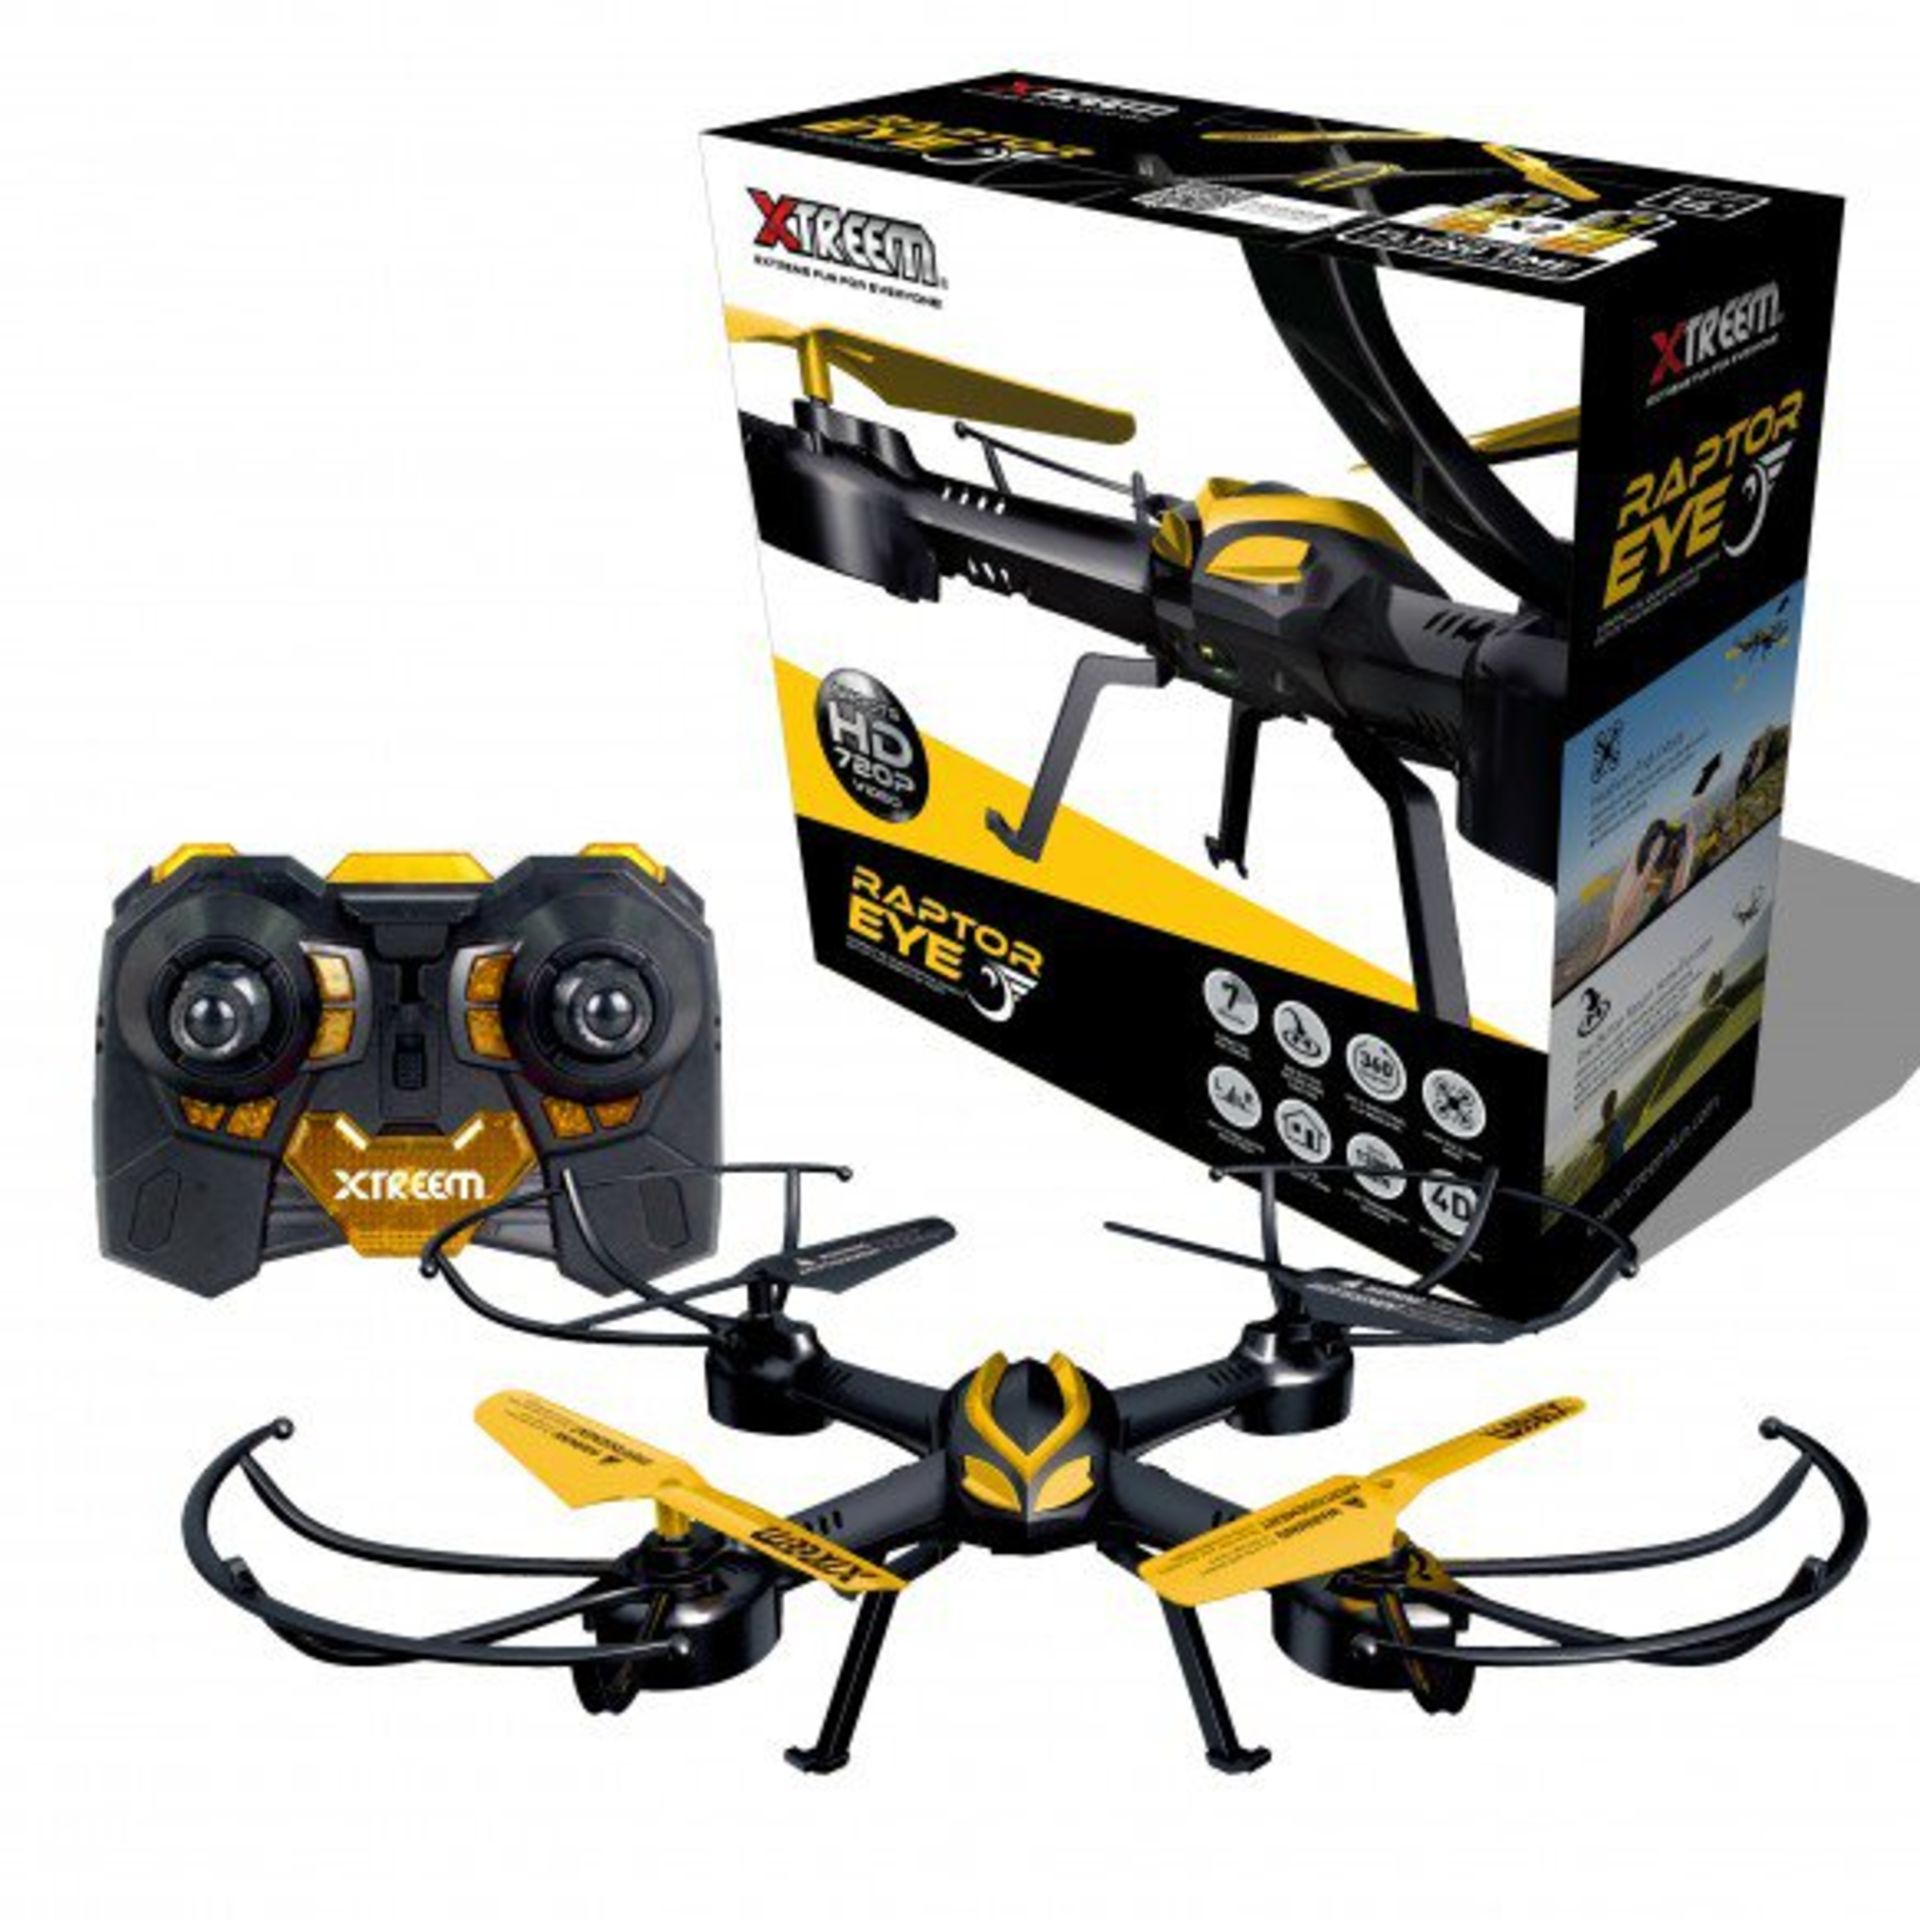 V *TRADE QTY* Brand New Swann Raptor Eye 720p HD Camera Drone - 360 Degree Manouverability - 28cm - Image 2 of 2